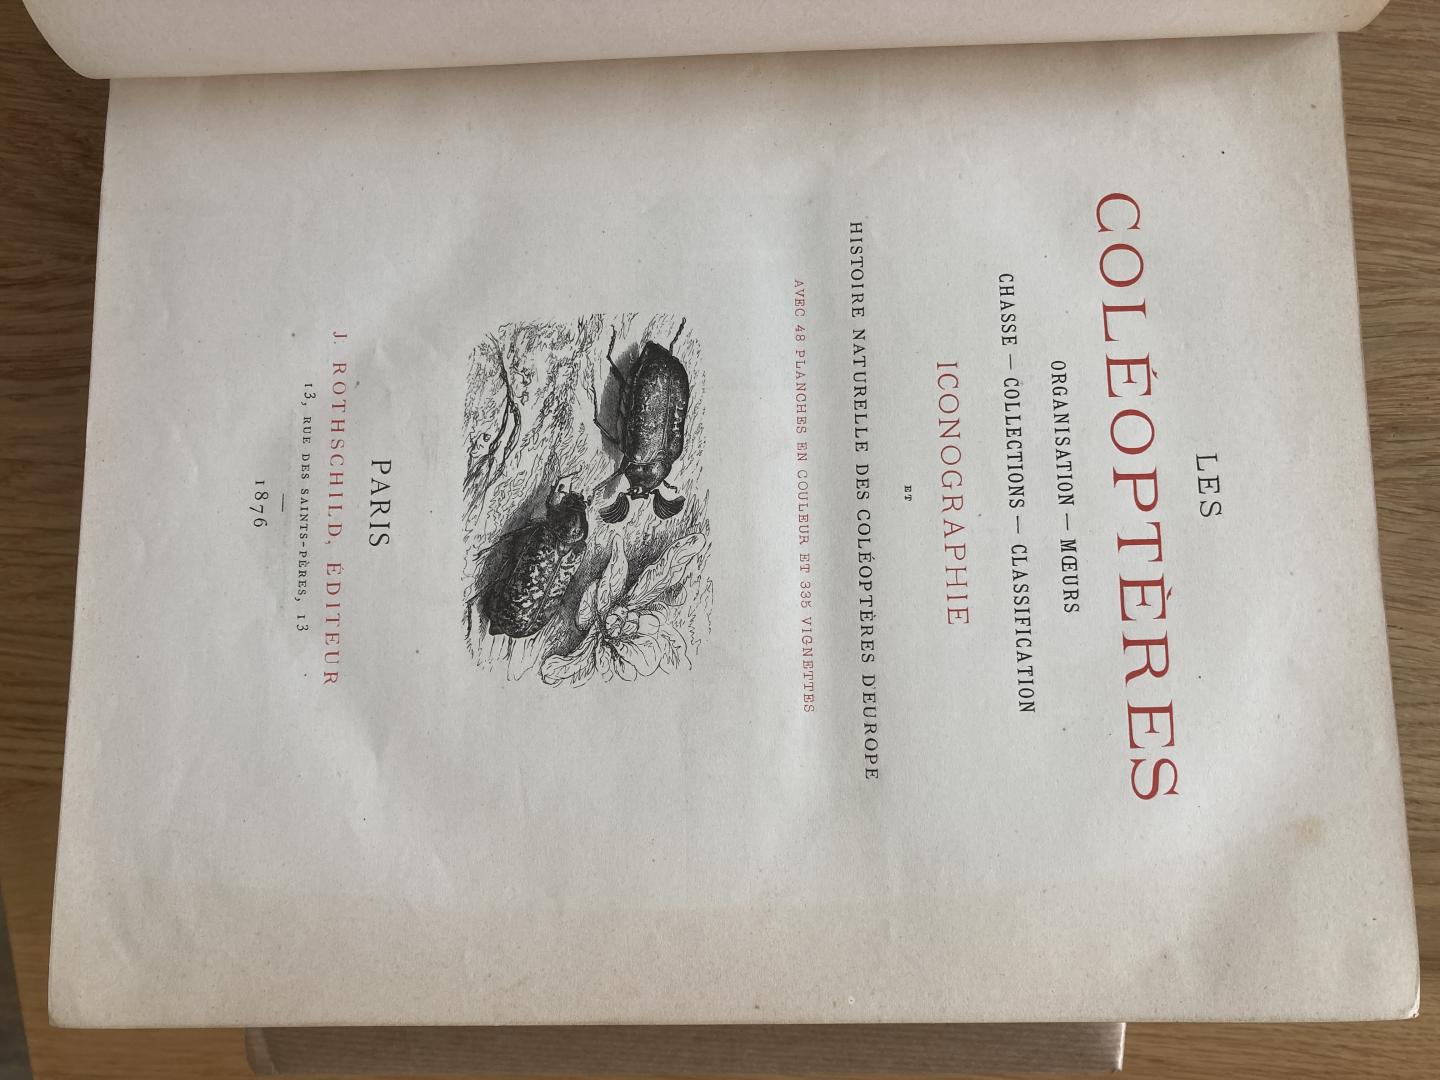  - [kevers] Les Coleopteres. Organisation - Moeurs - Chasse - Collections - Classification. Iconographie Et Histoire Naturelle Des Coleopteres d'Europe